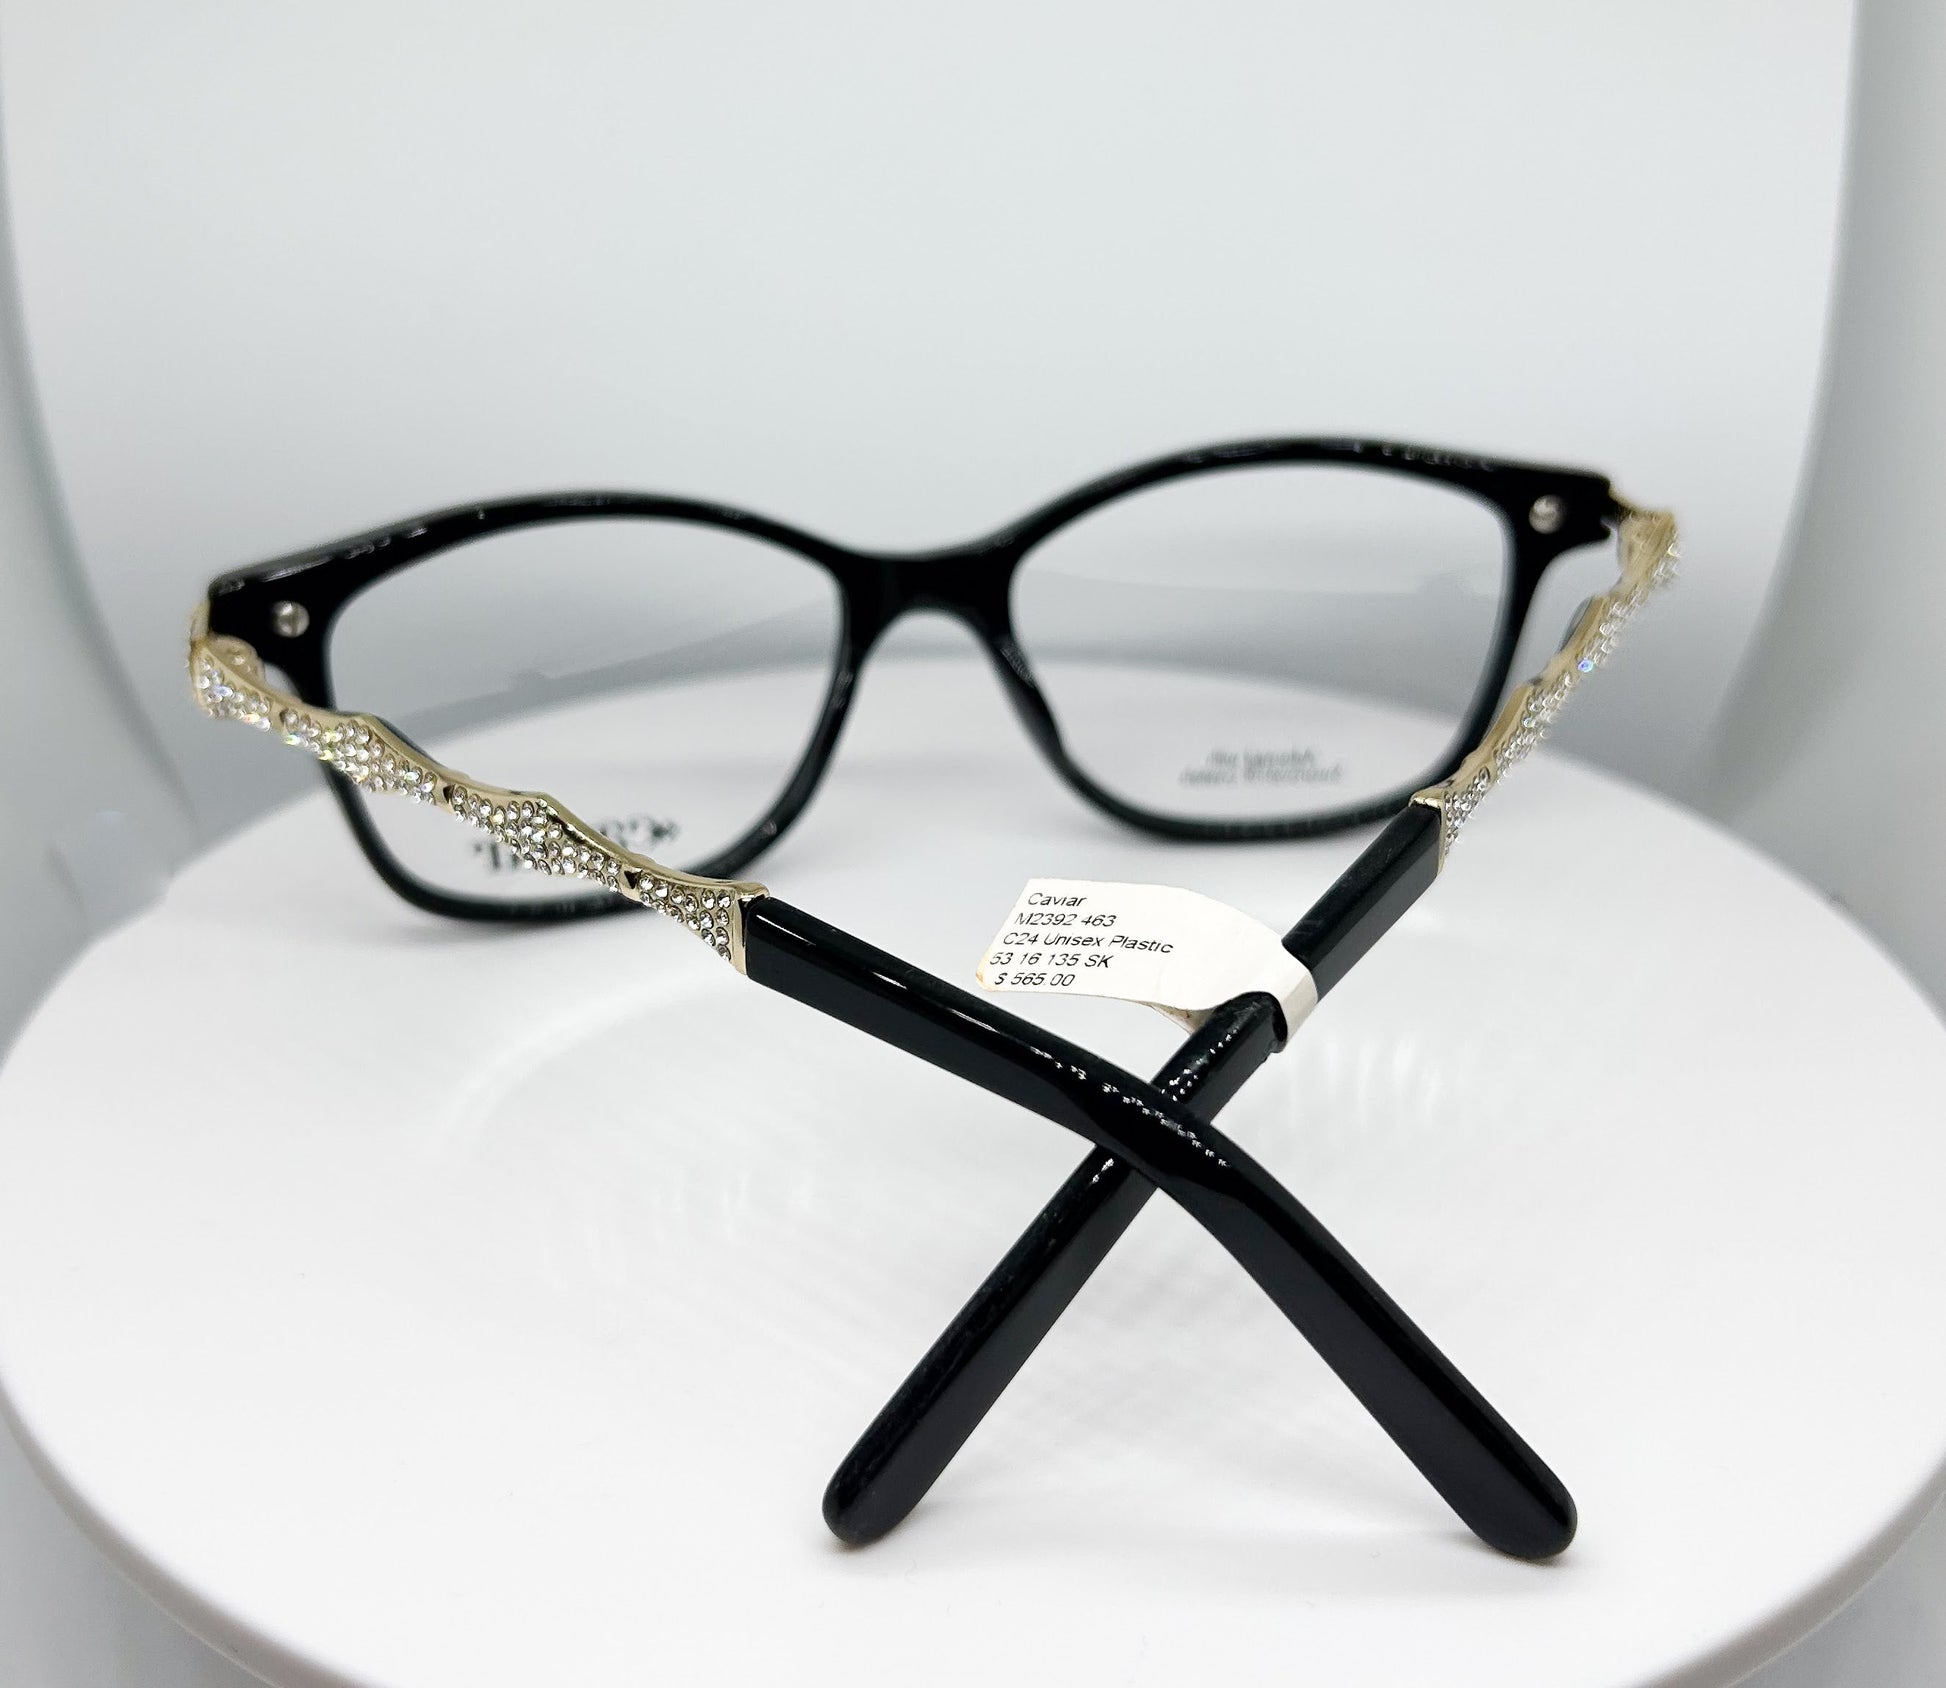 Meyer Eyewear Skara Titanium Brown Semi Brand Glasses Eyeglass Frame  Eyeglasses